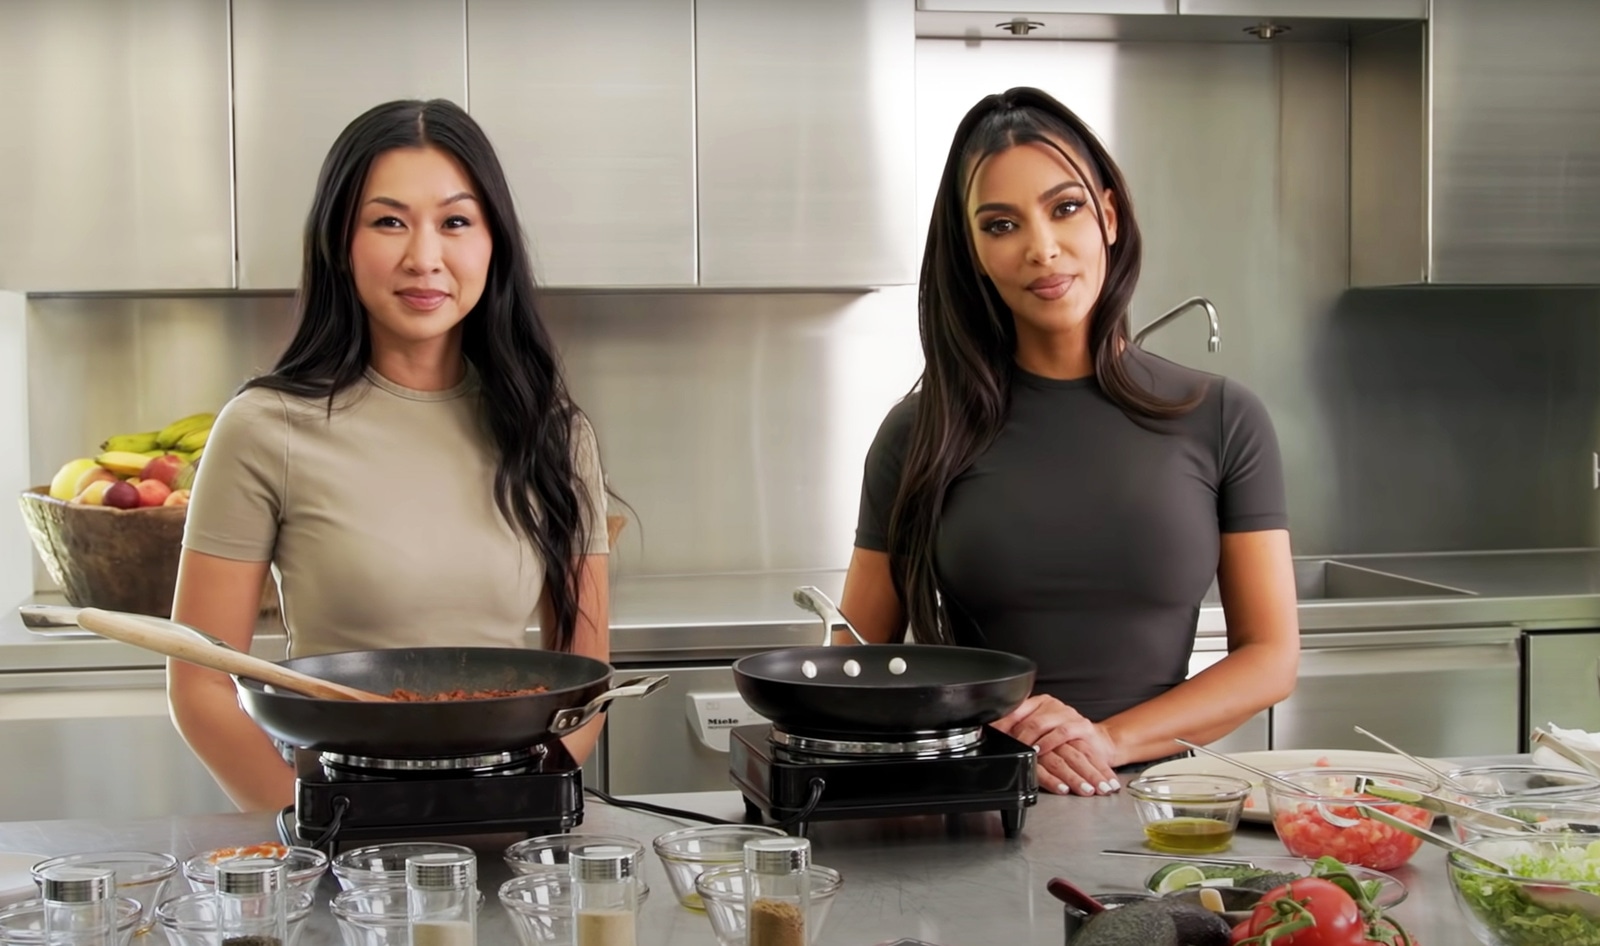 Kim Kardashian Just Taught Her First Vegan Cooking Class. Here’s Her Favorite Taco Recipe.